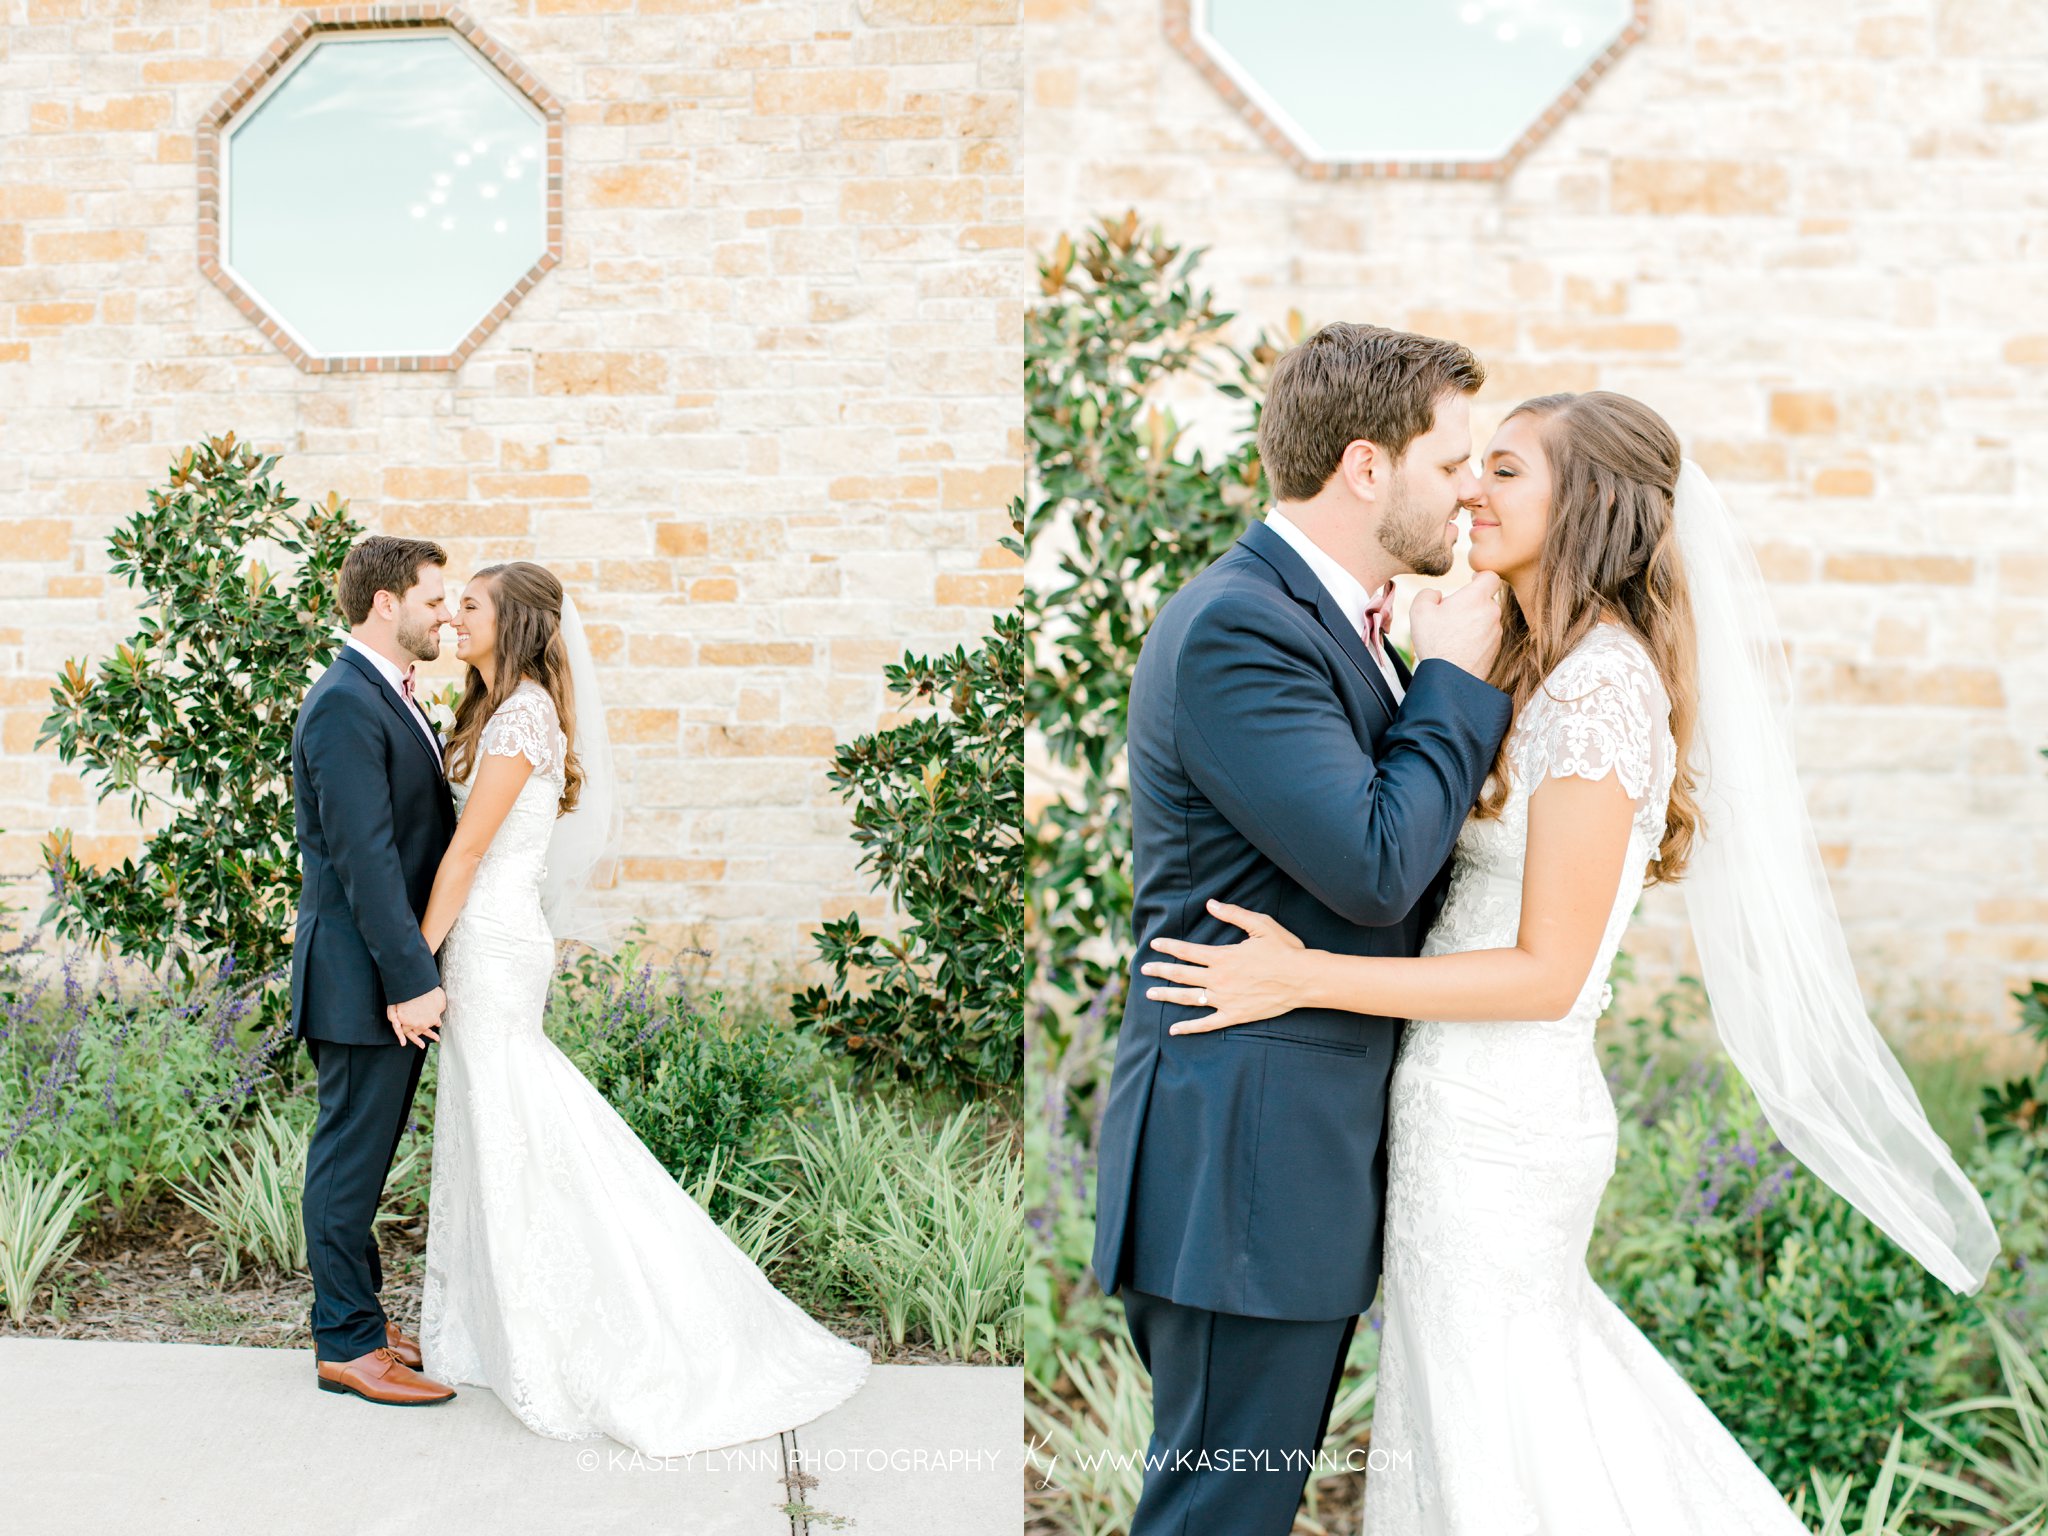 Lindsay Lakes Wedding / Kasey Lynn Photography